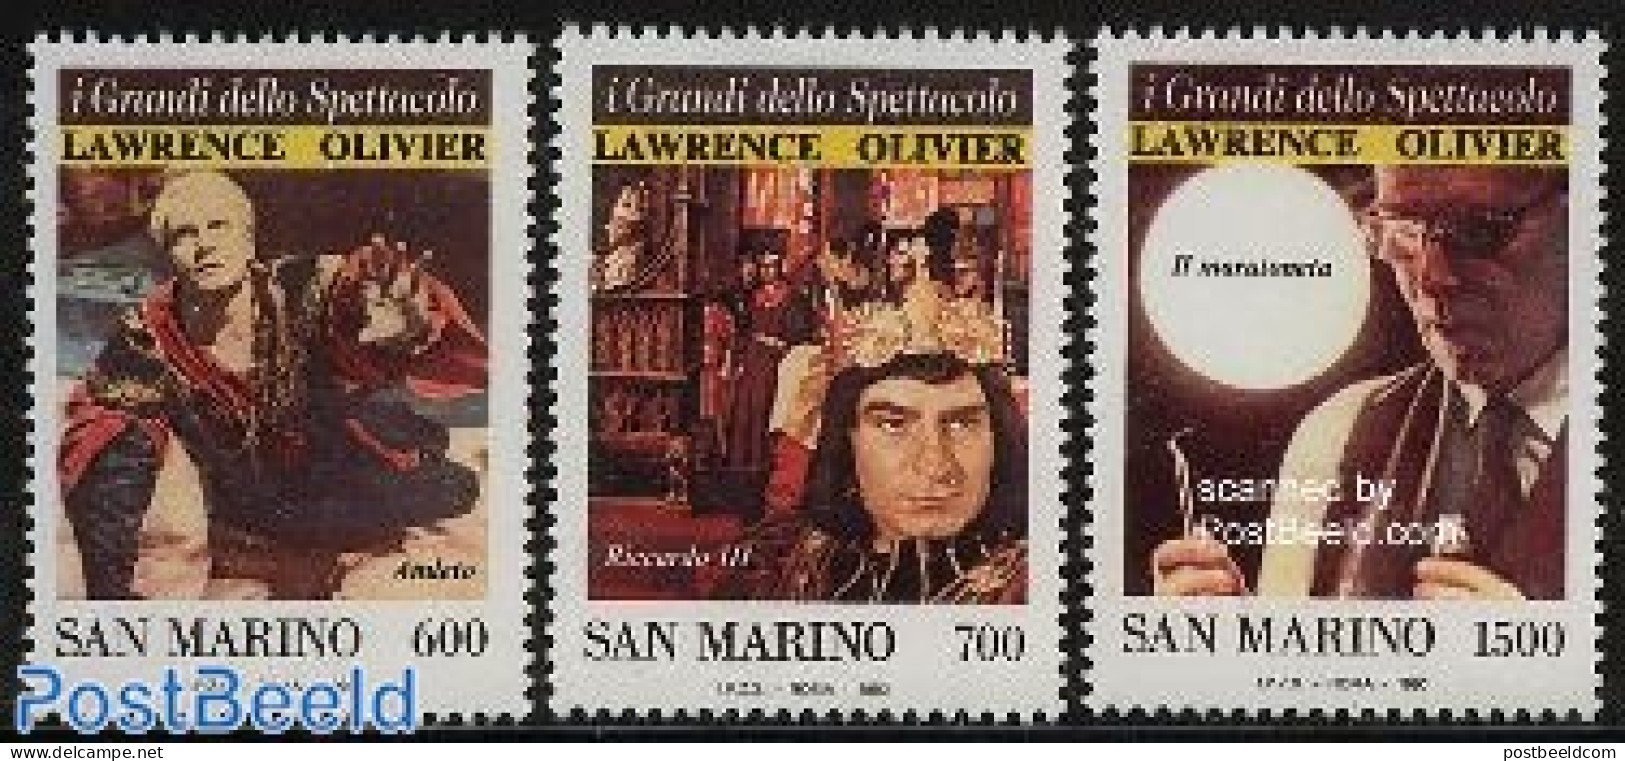 San Marino 1990 I Grandi Della Spettacolo 3v, Mint NH, Performance Art - Theatre - Neufs